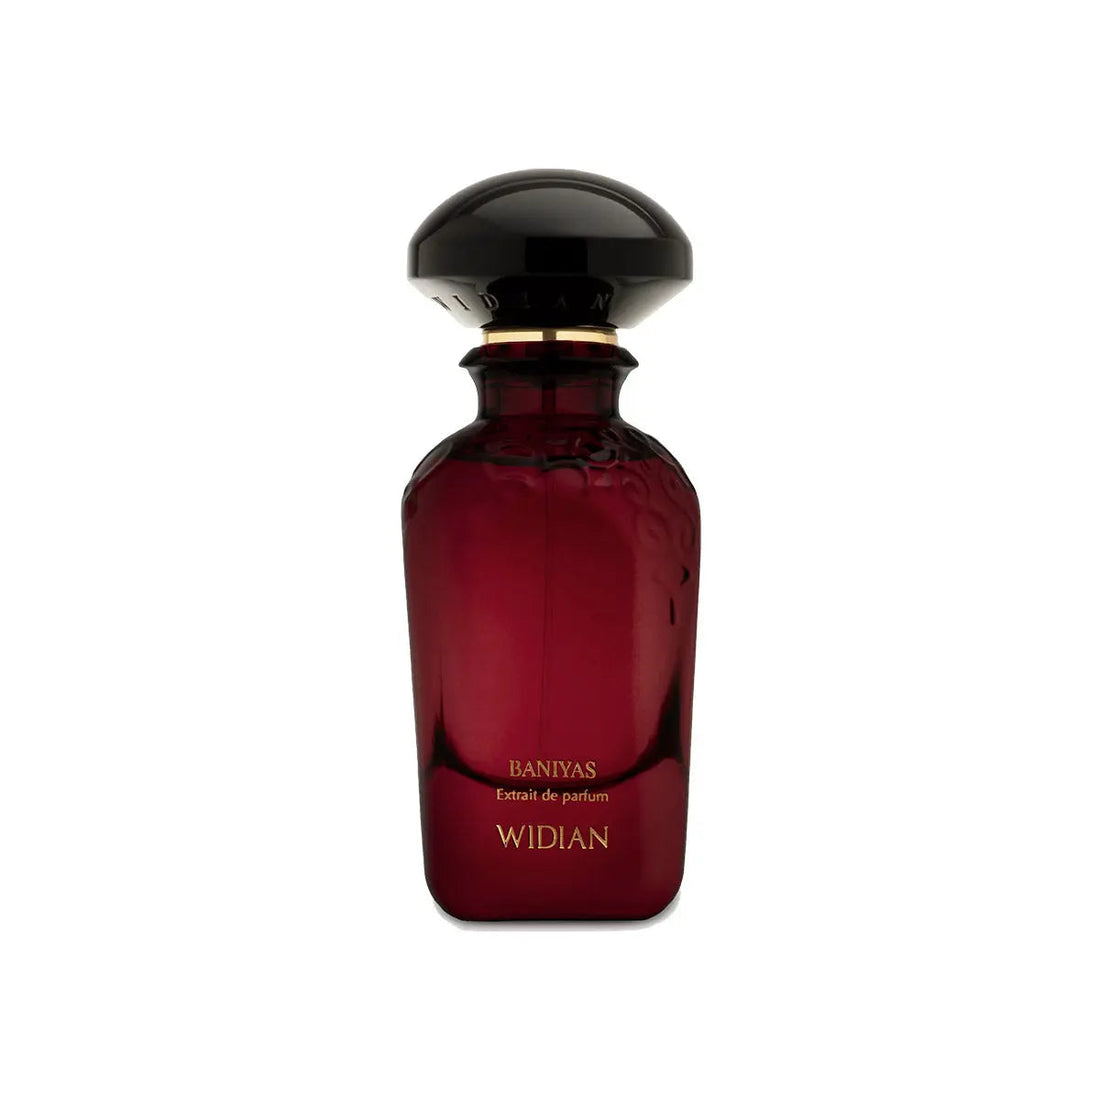 Extracto de perfume de Widian de Baniyas - 50 ml